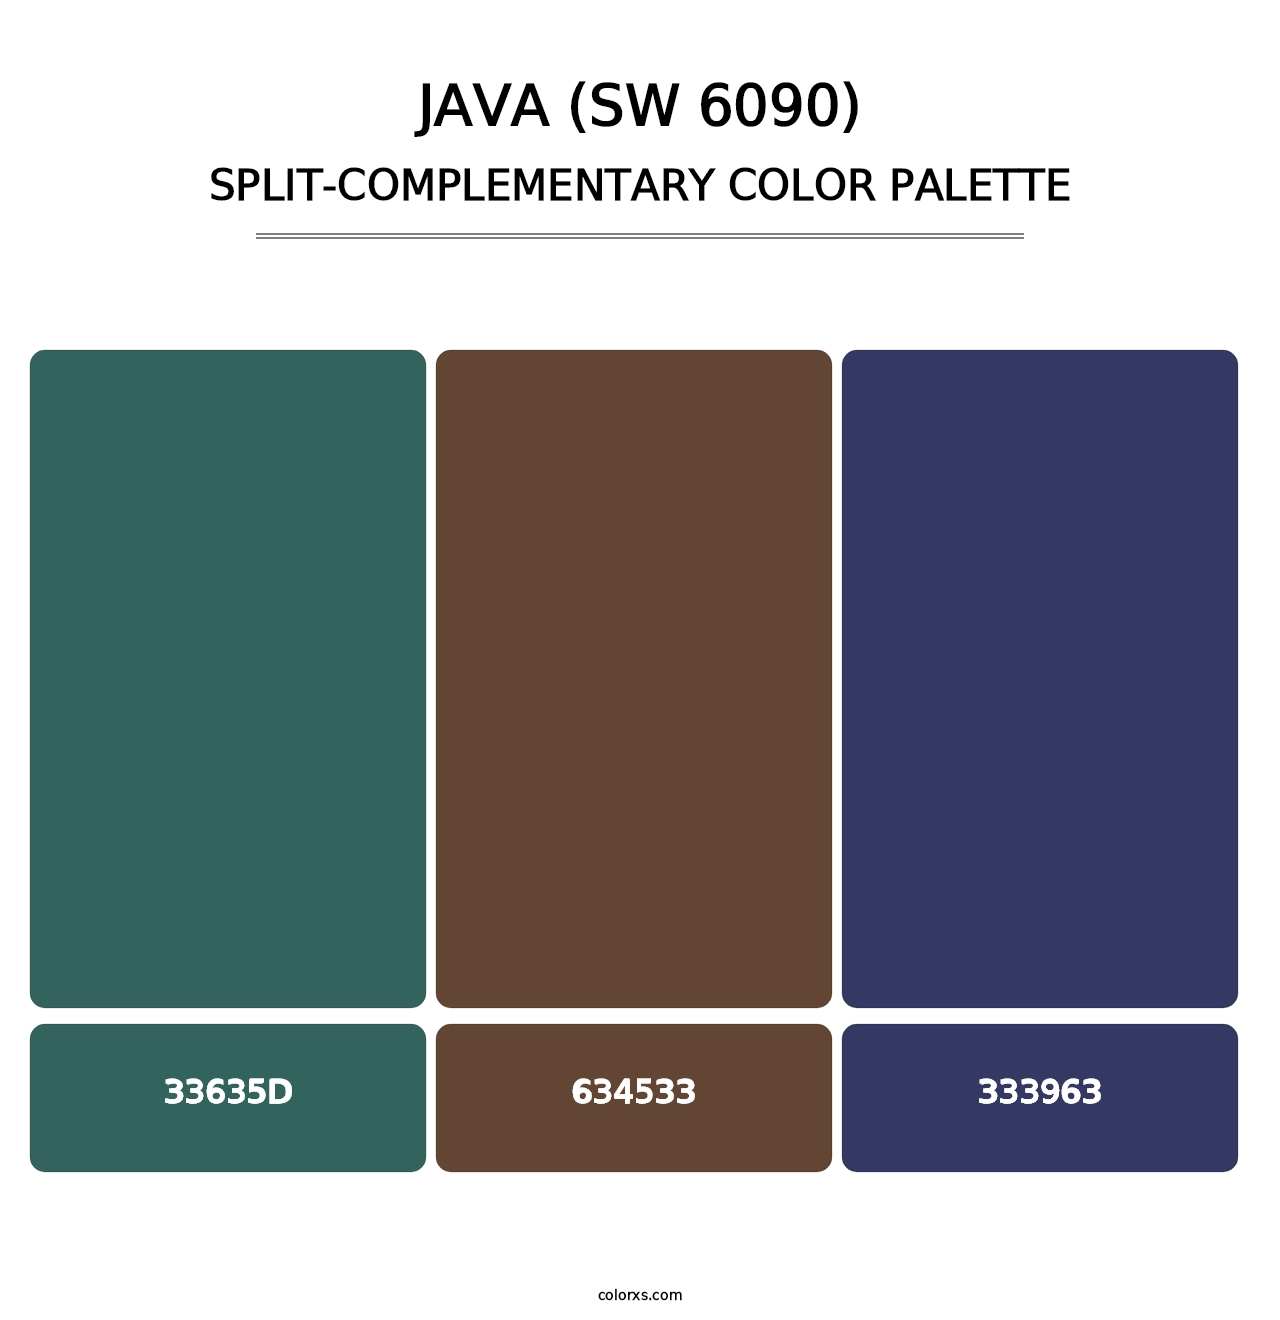 Java (SW 6090) - Split-Complementary Color Palette